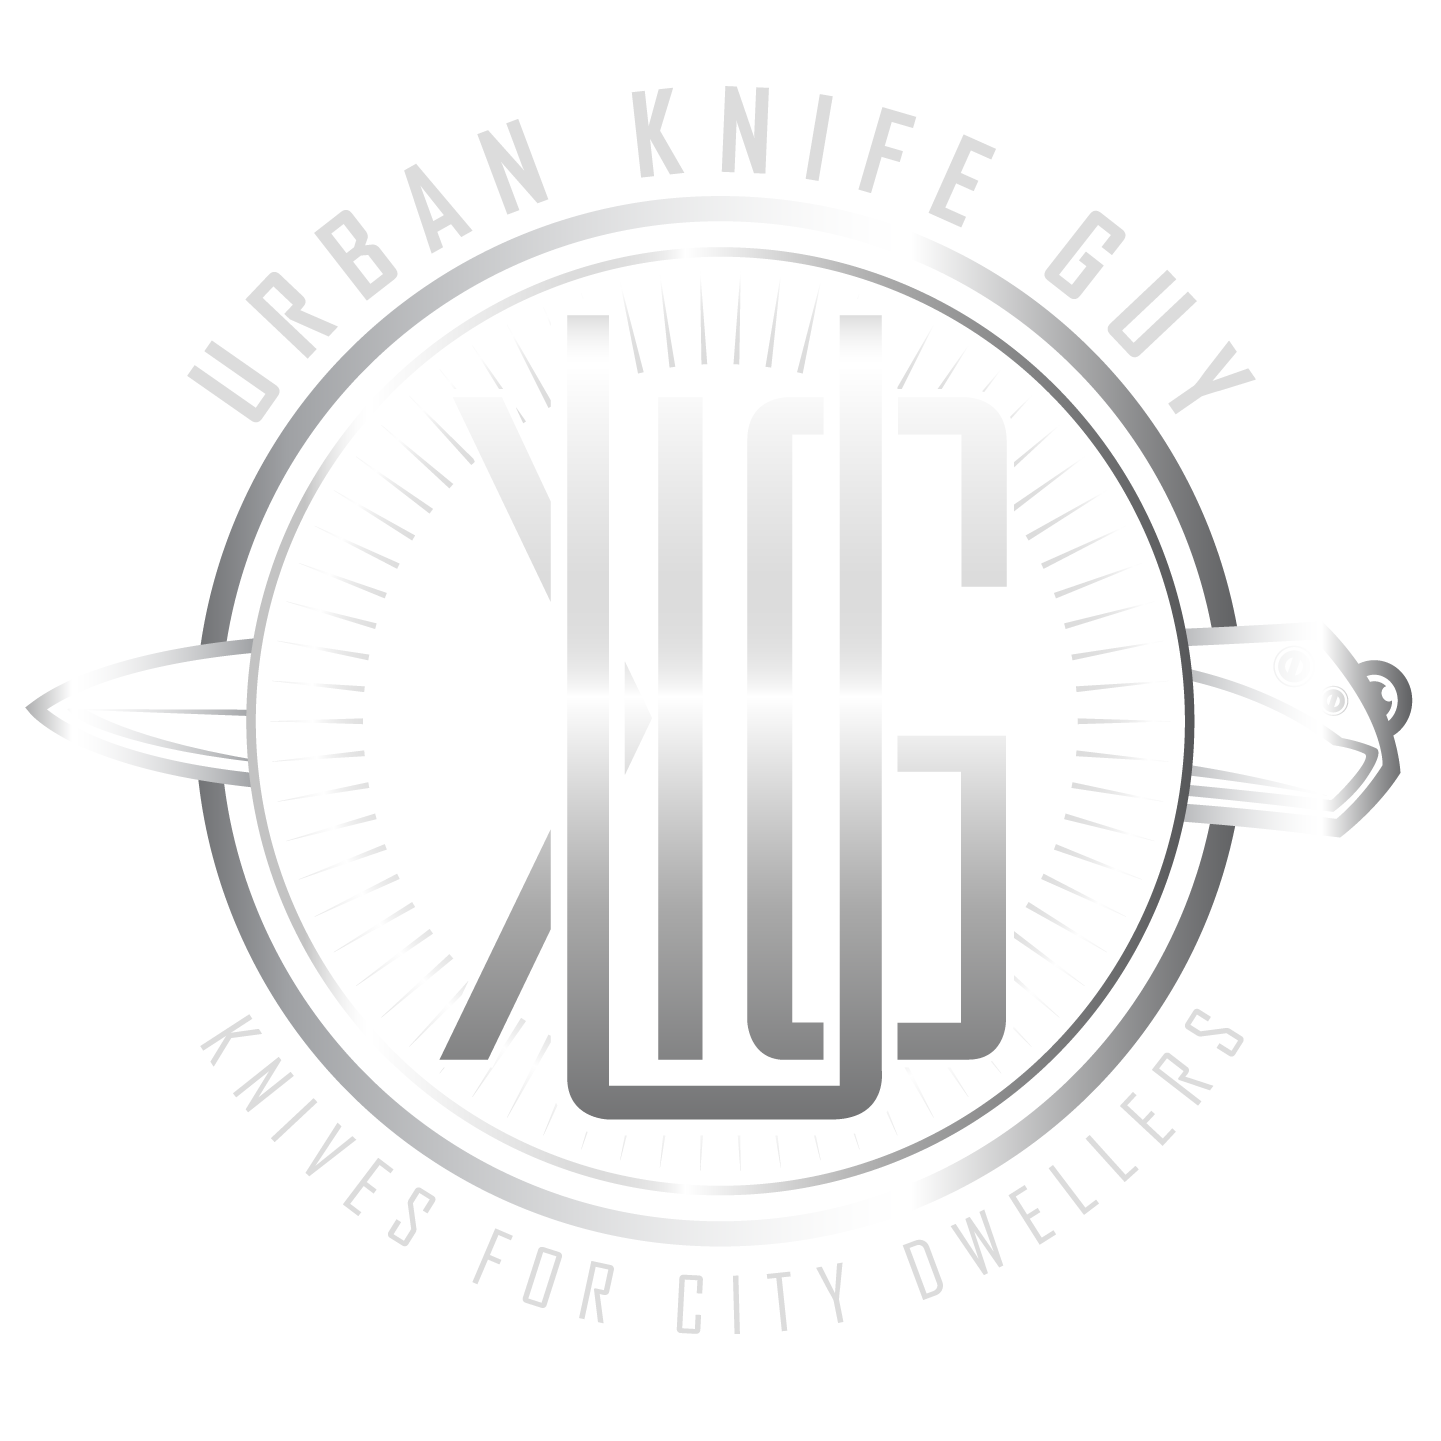 Urban Knife Guy